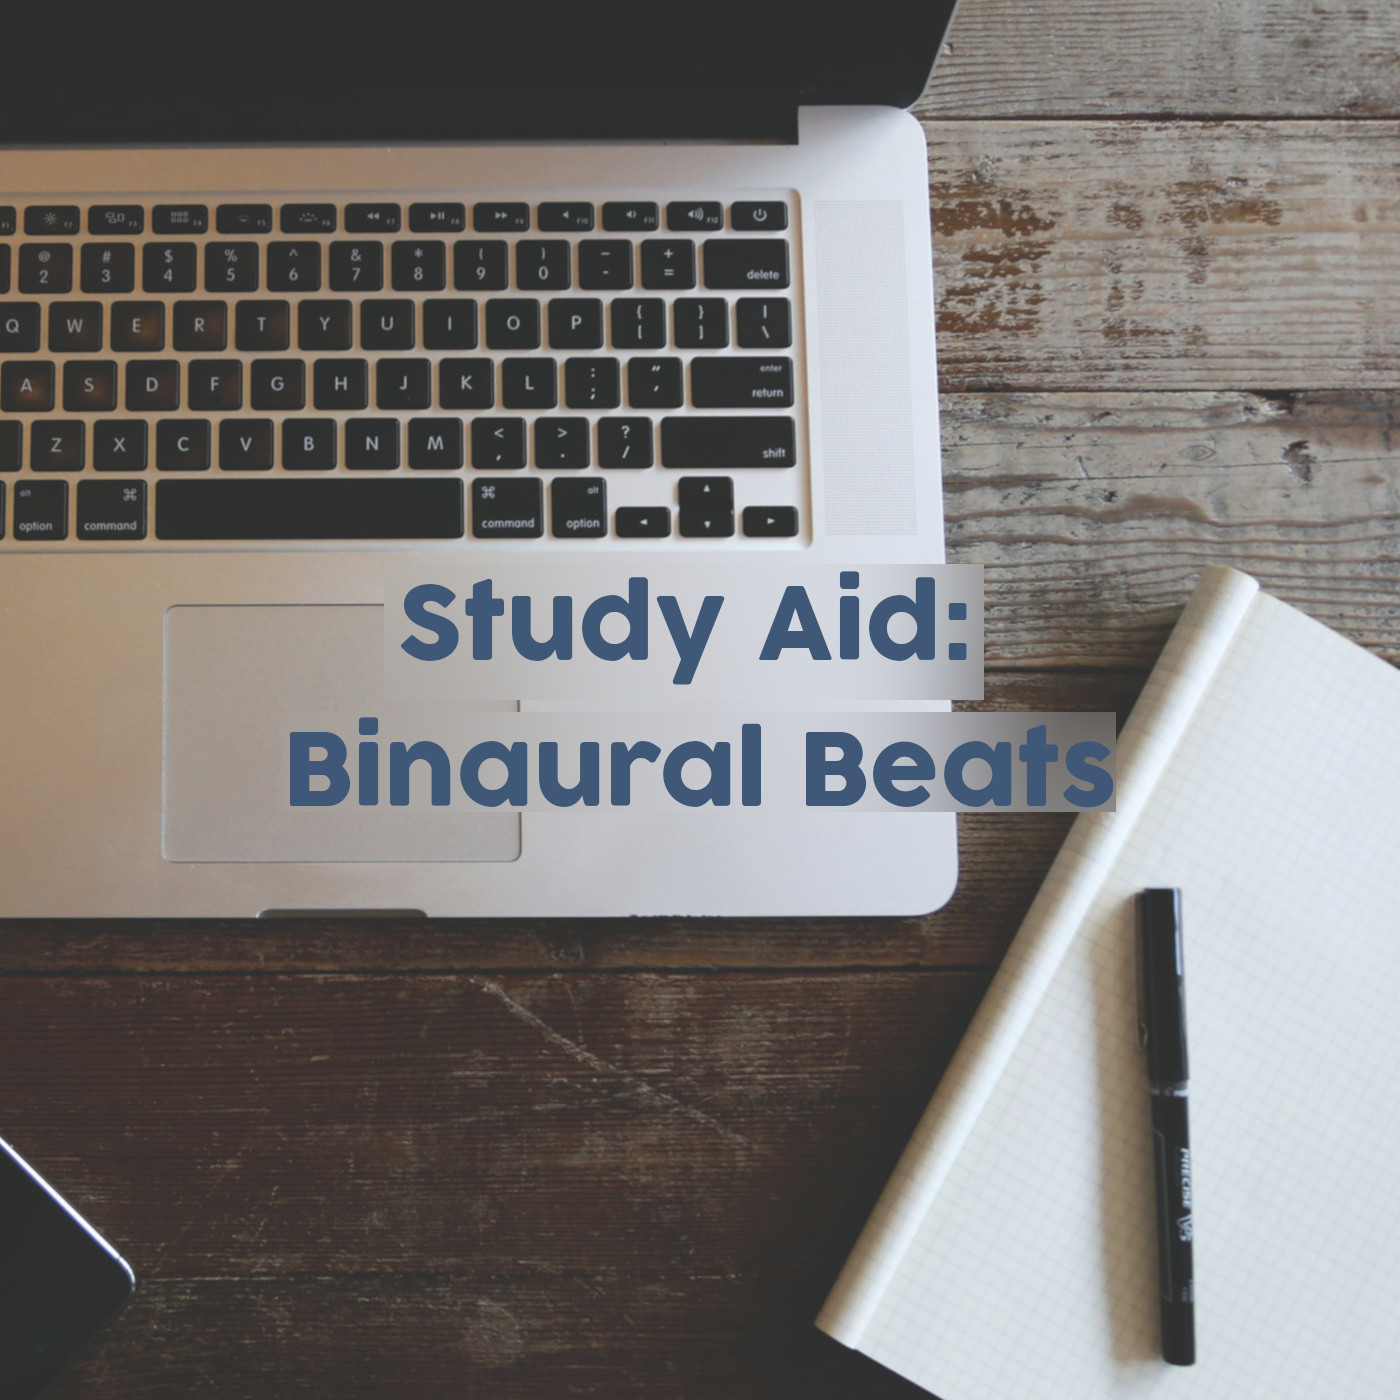 Study Aid: Binaural Beats